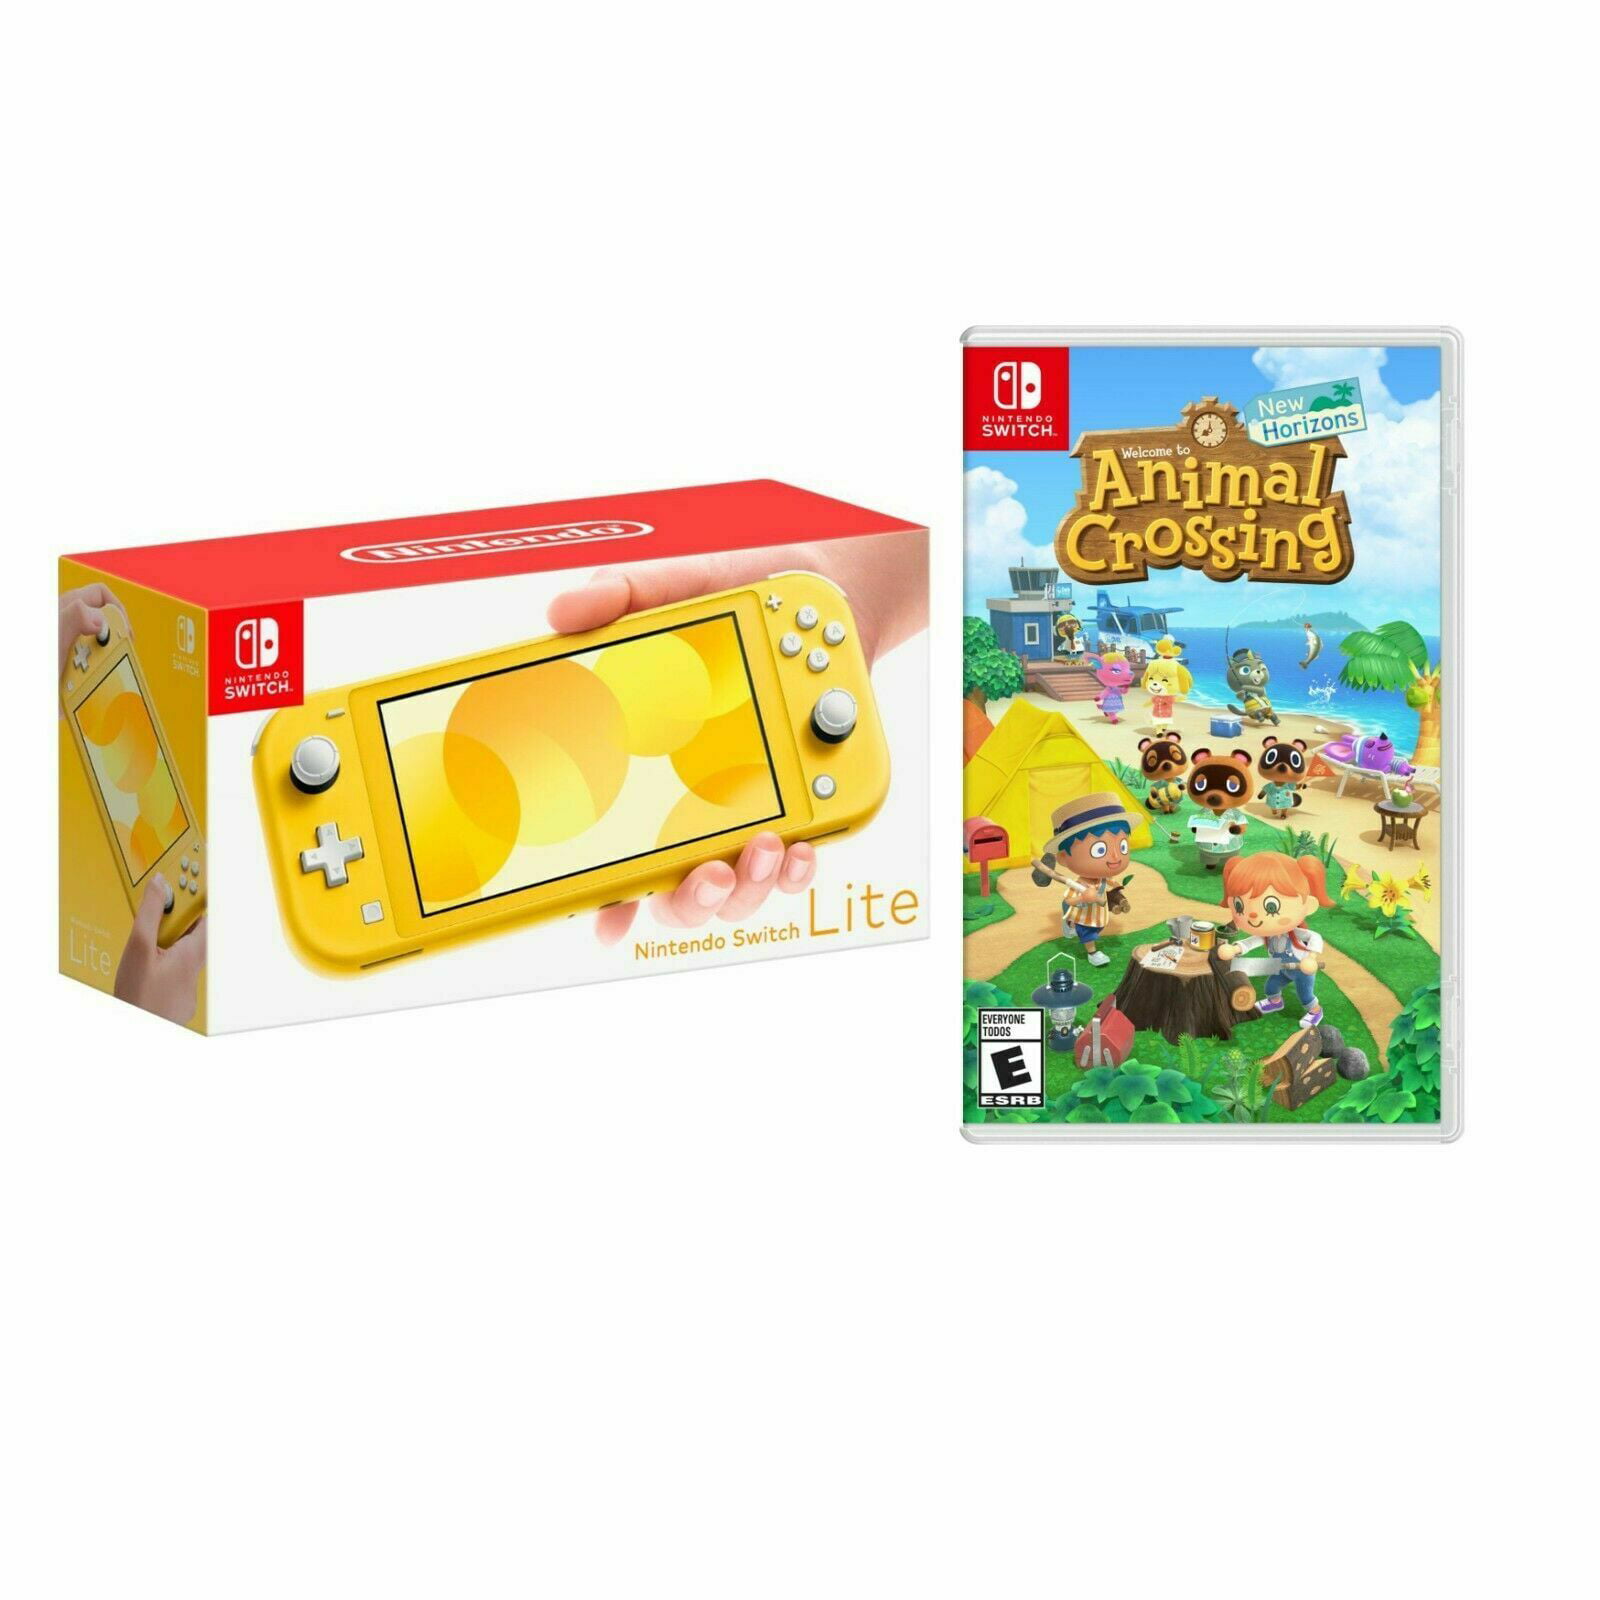 Nintendo Switch Lite Yellow Bundle With Animal Crossing New